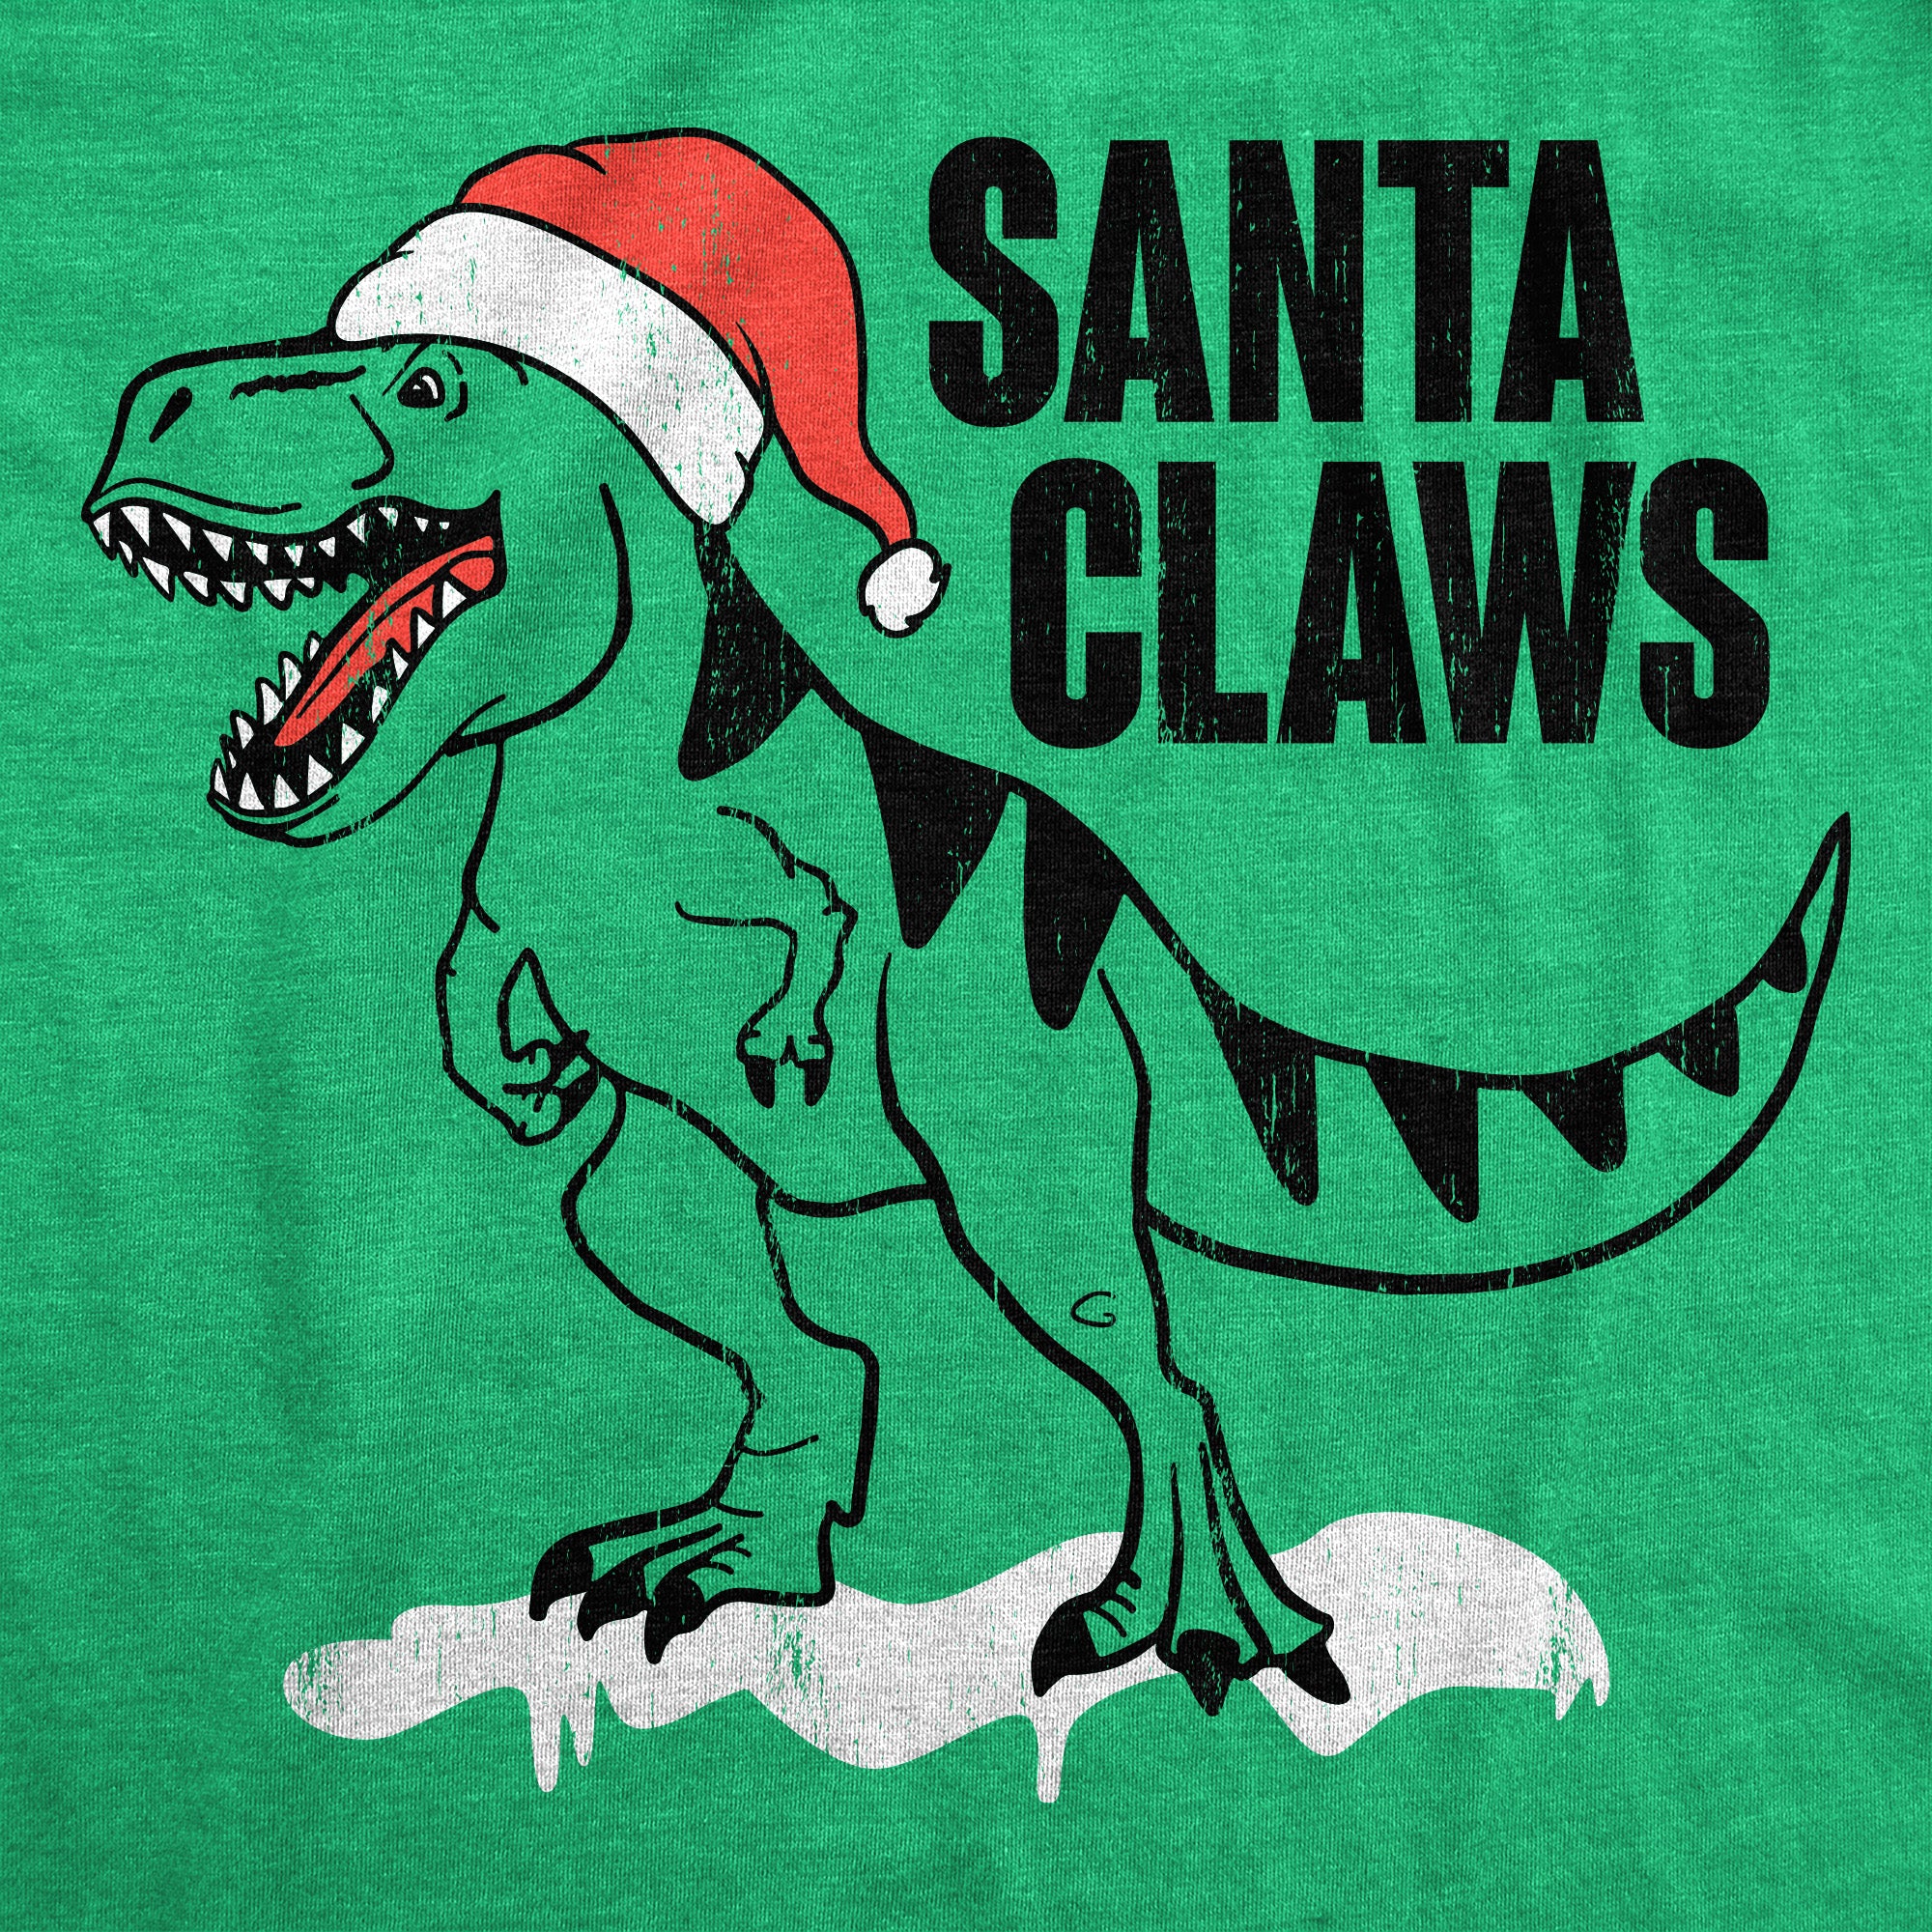 Funny Heather Green - Santa Claws Santa Claws Womens T Shirt Nerdy Christmas Dinosaur sarcastic Tee